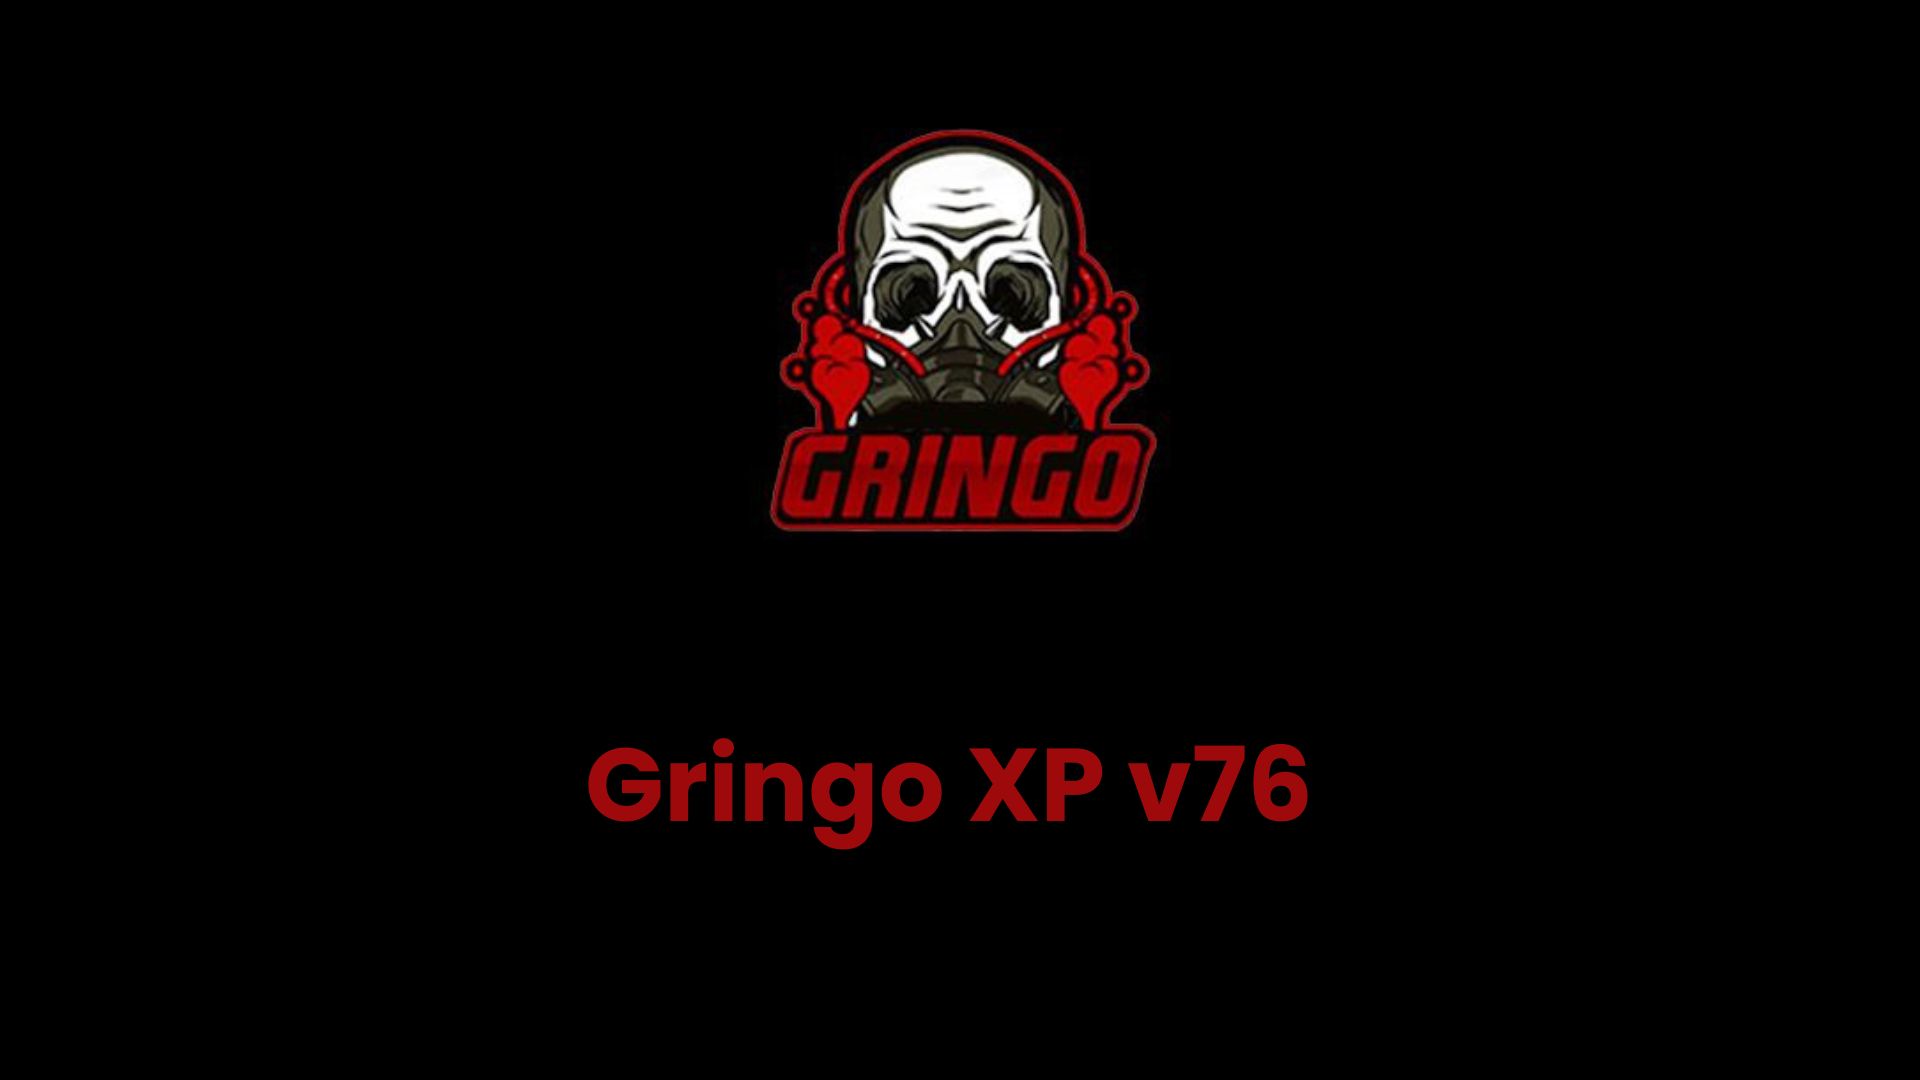 Gringo XP v76